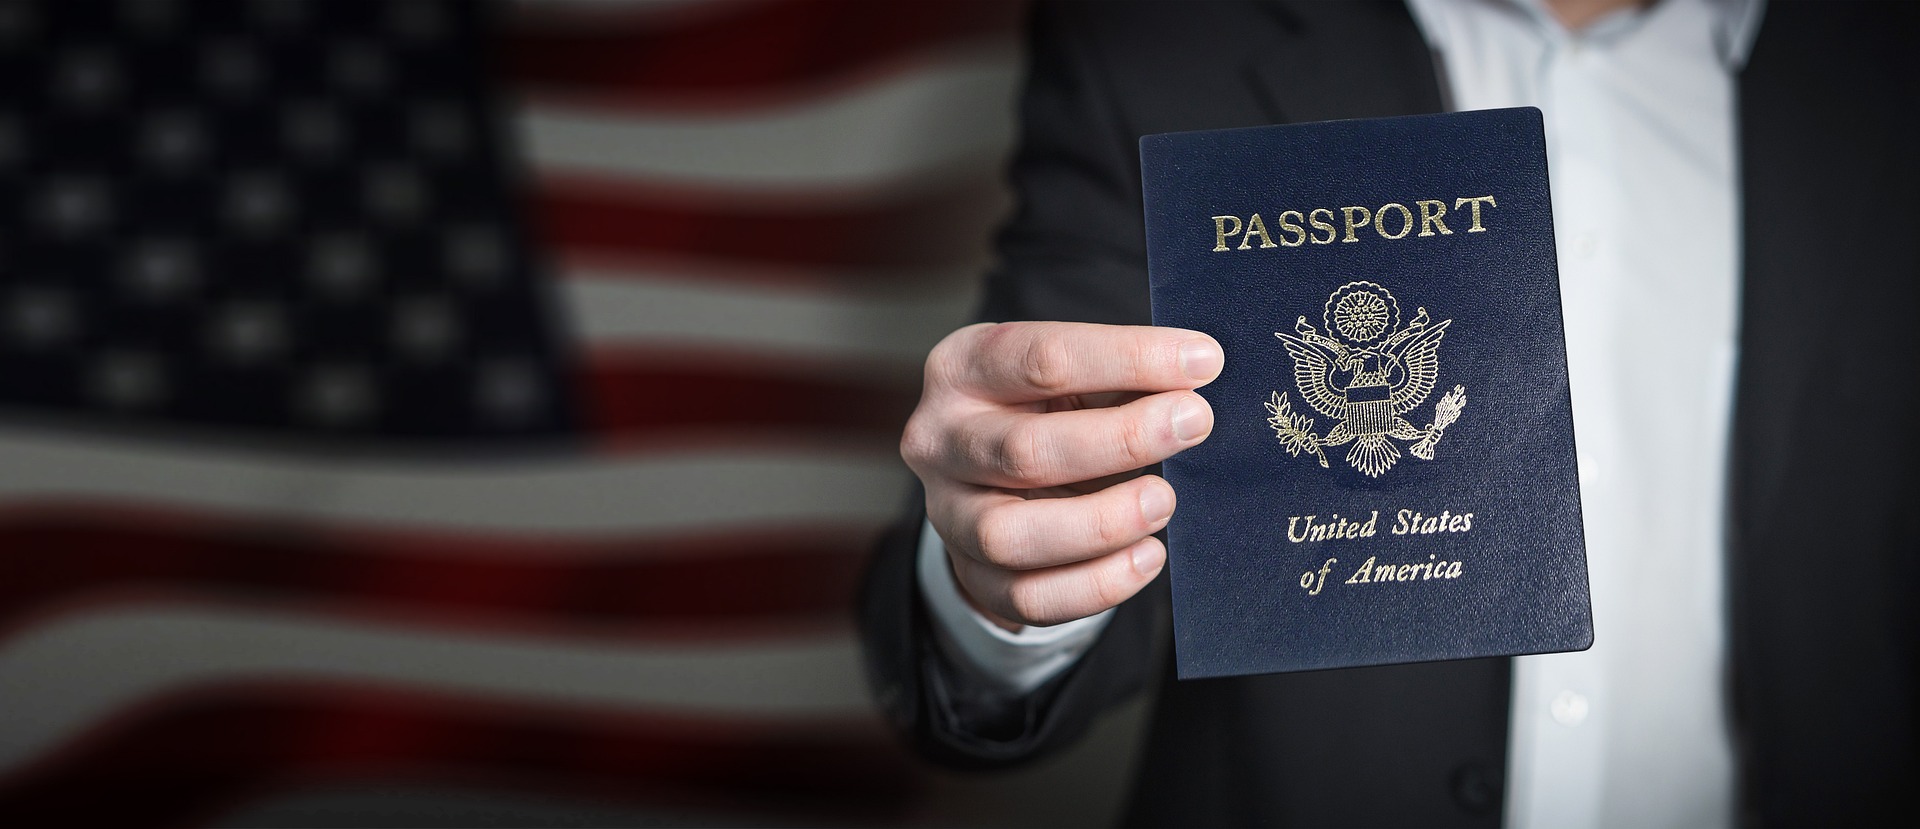 how to open spid - man holding passport